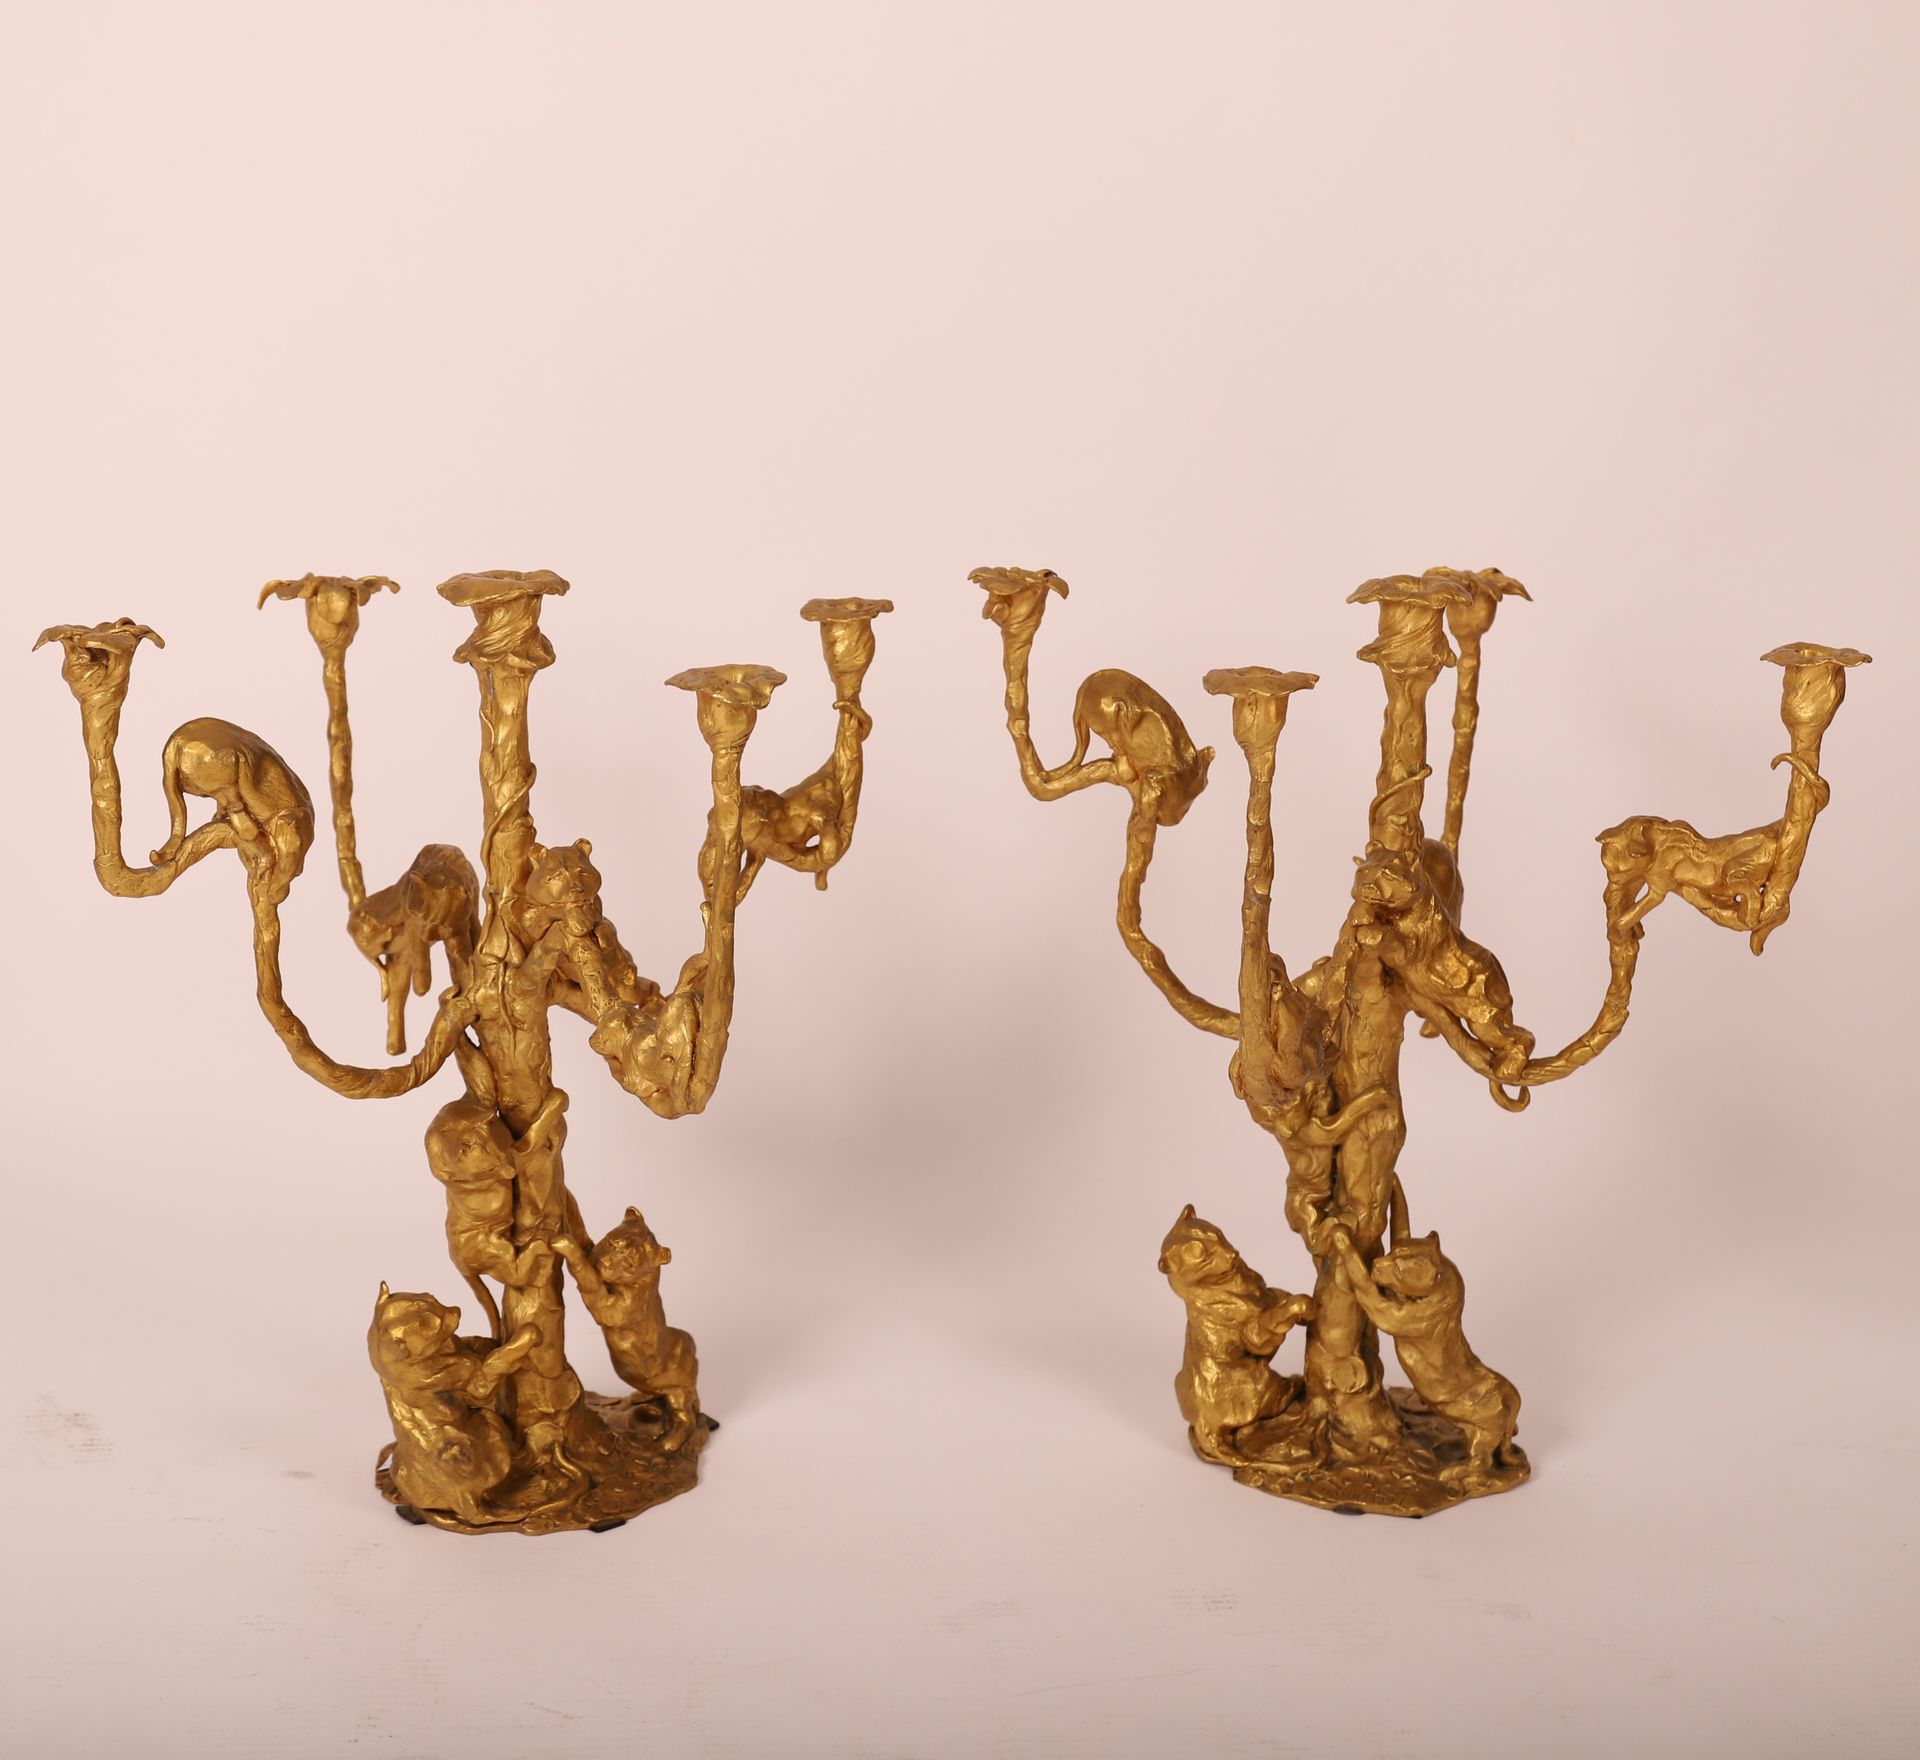 Null 何塞-玛丽亚-戴维德（1944-2015）的一对巨大的金铜 "黑豹 "灯笼

表现豹子在树枝上玩耍或休息的情景

5个轻型武器

底座上有签名 "DA&hellip;